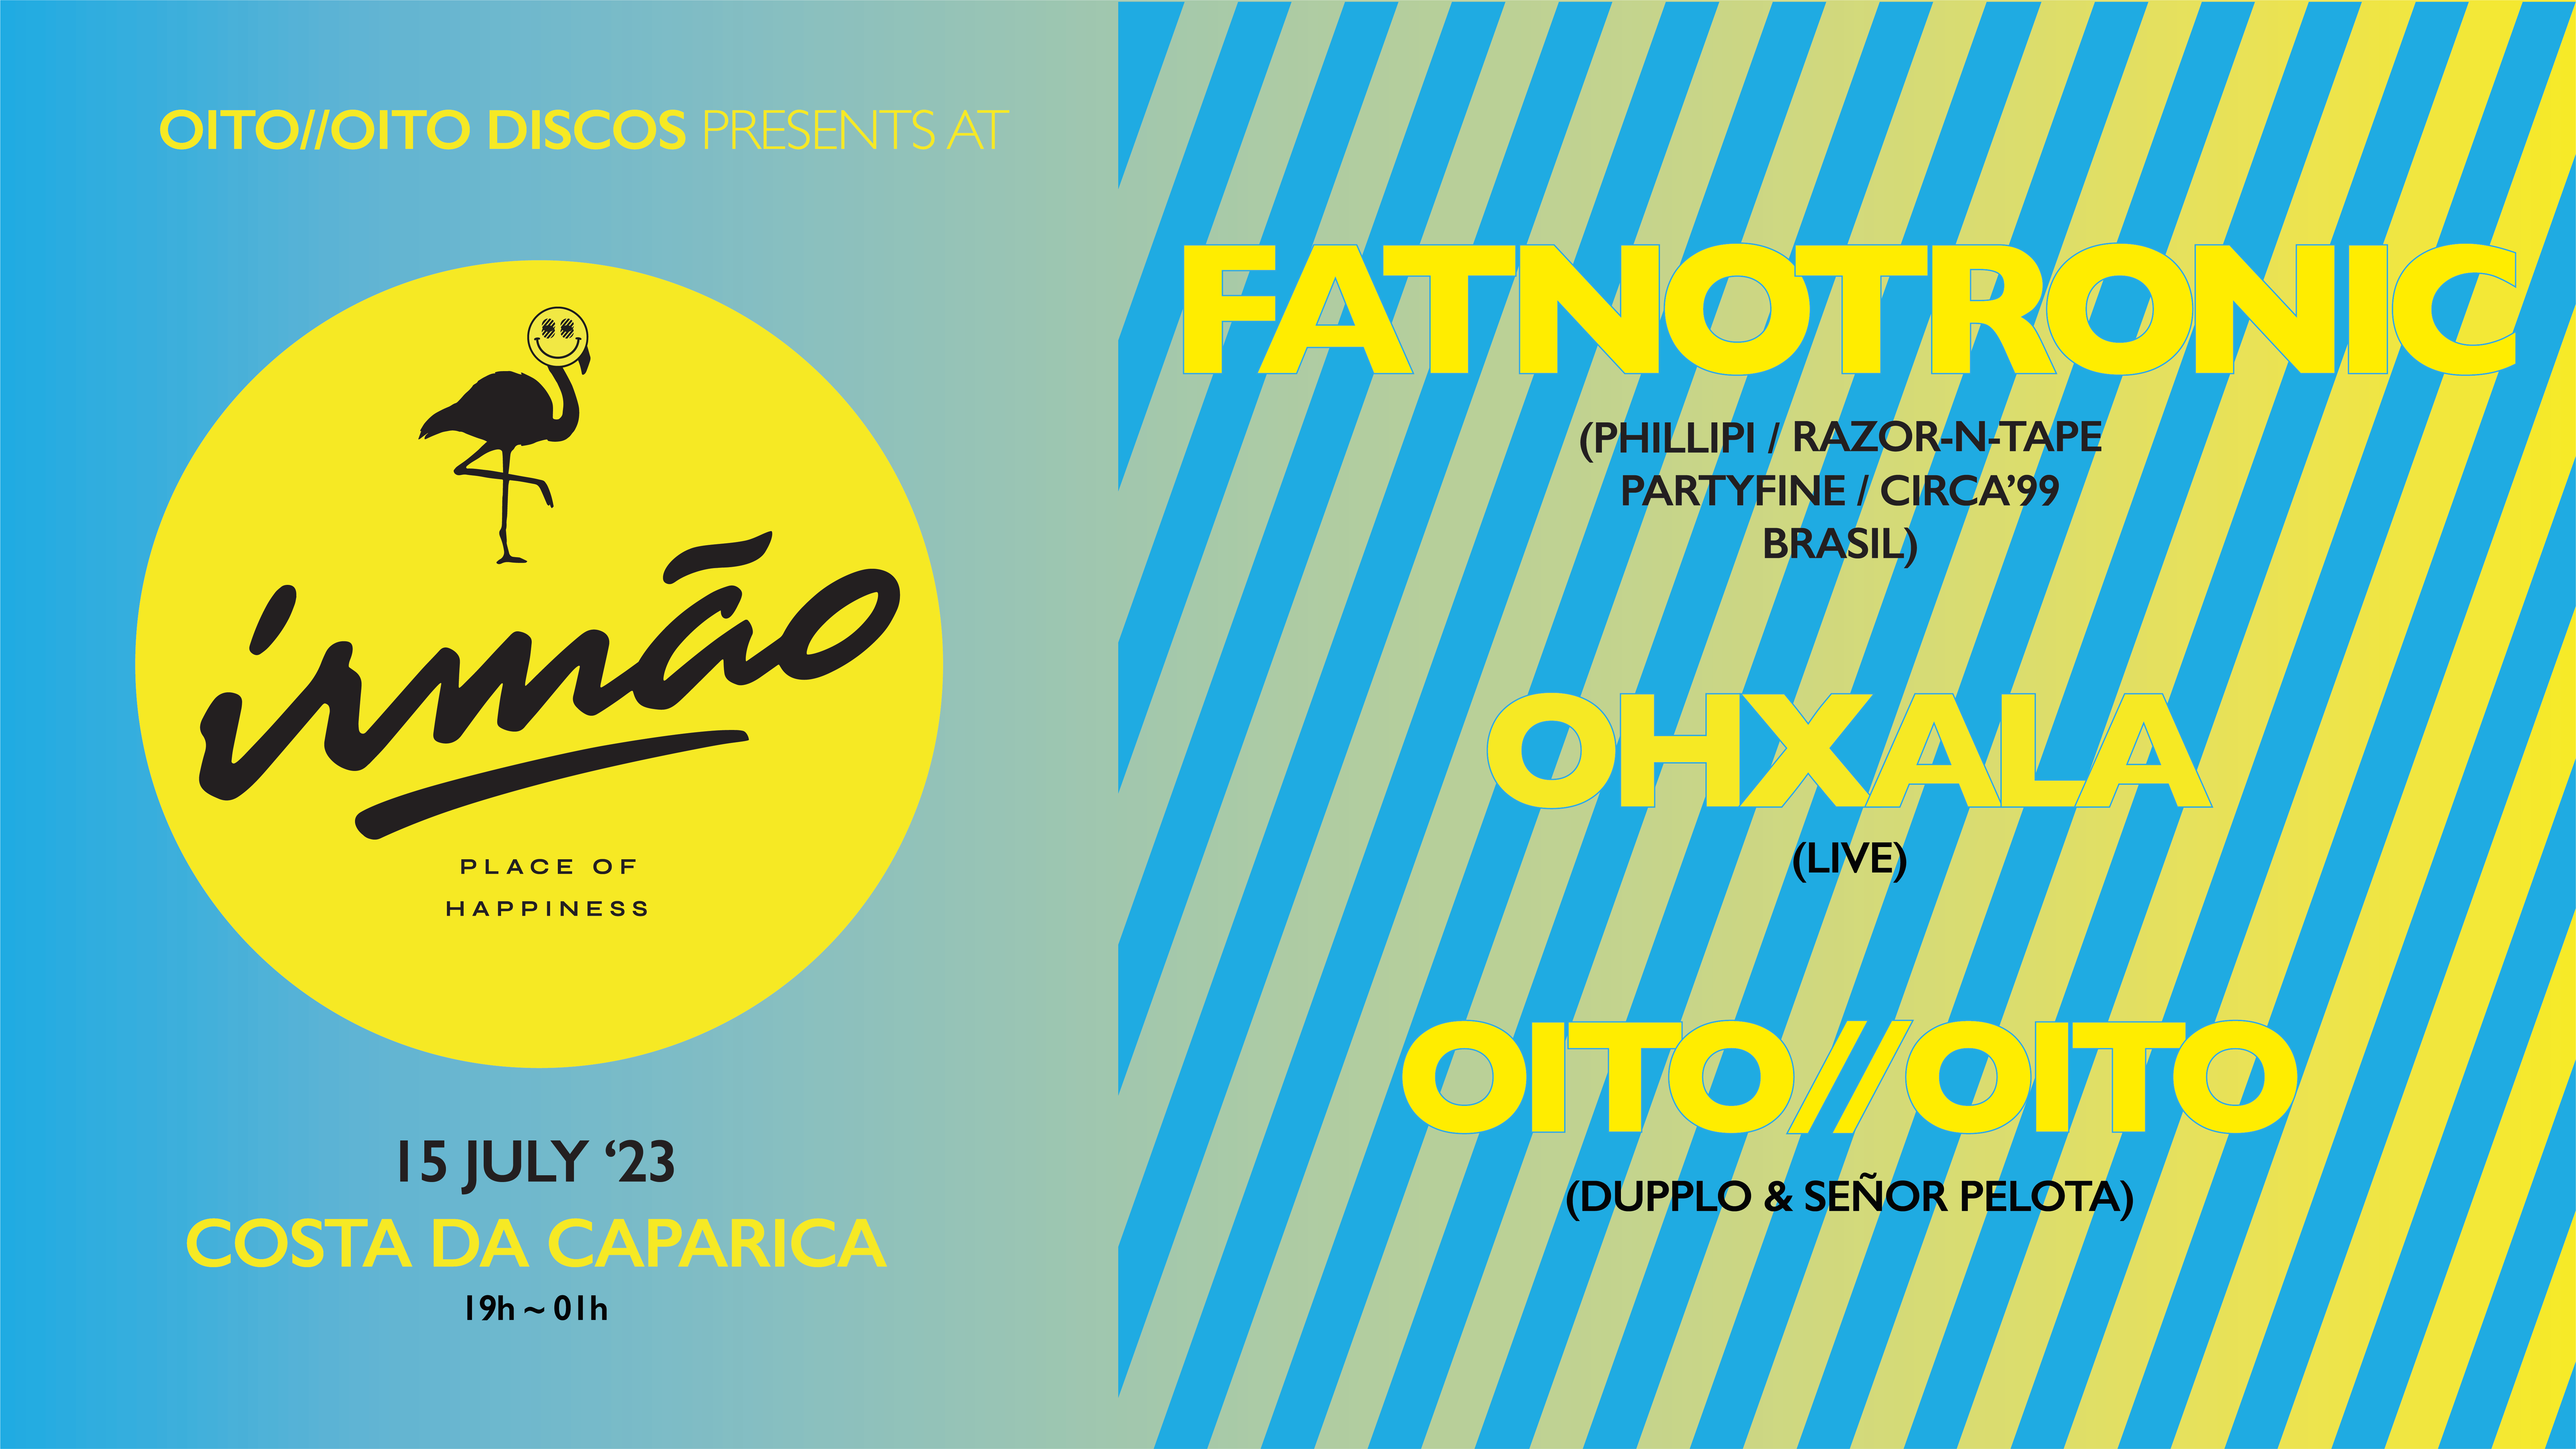 OITO//OITO Discos presents @Irmão: FATNOTRONIC OHXALA OITO//OITO - Página frontal